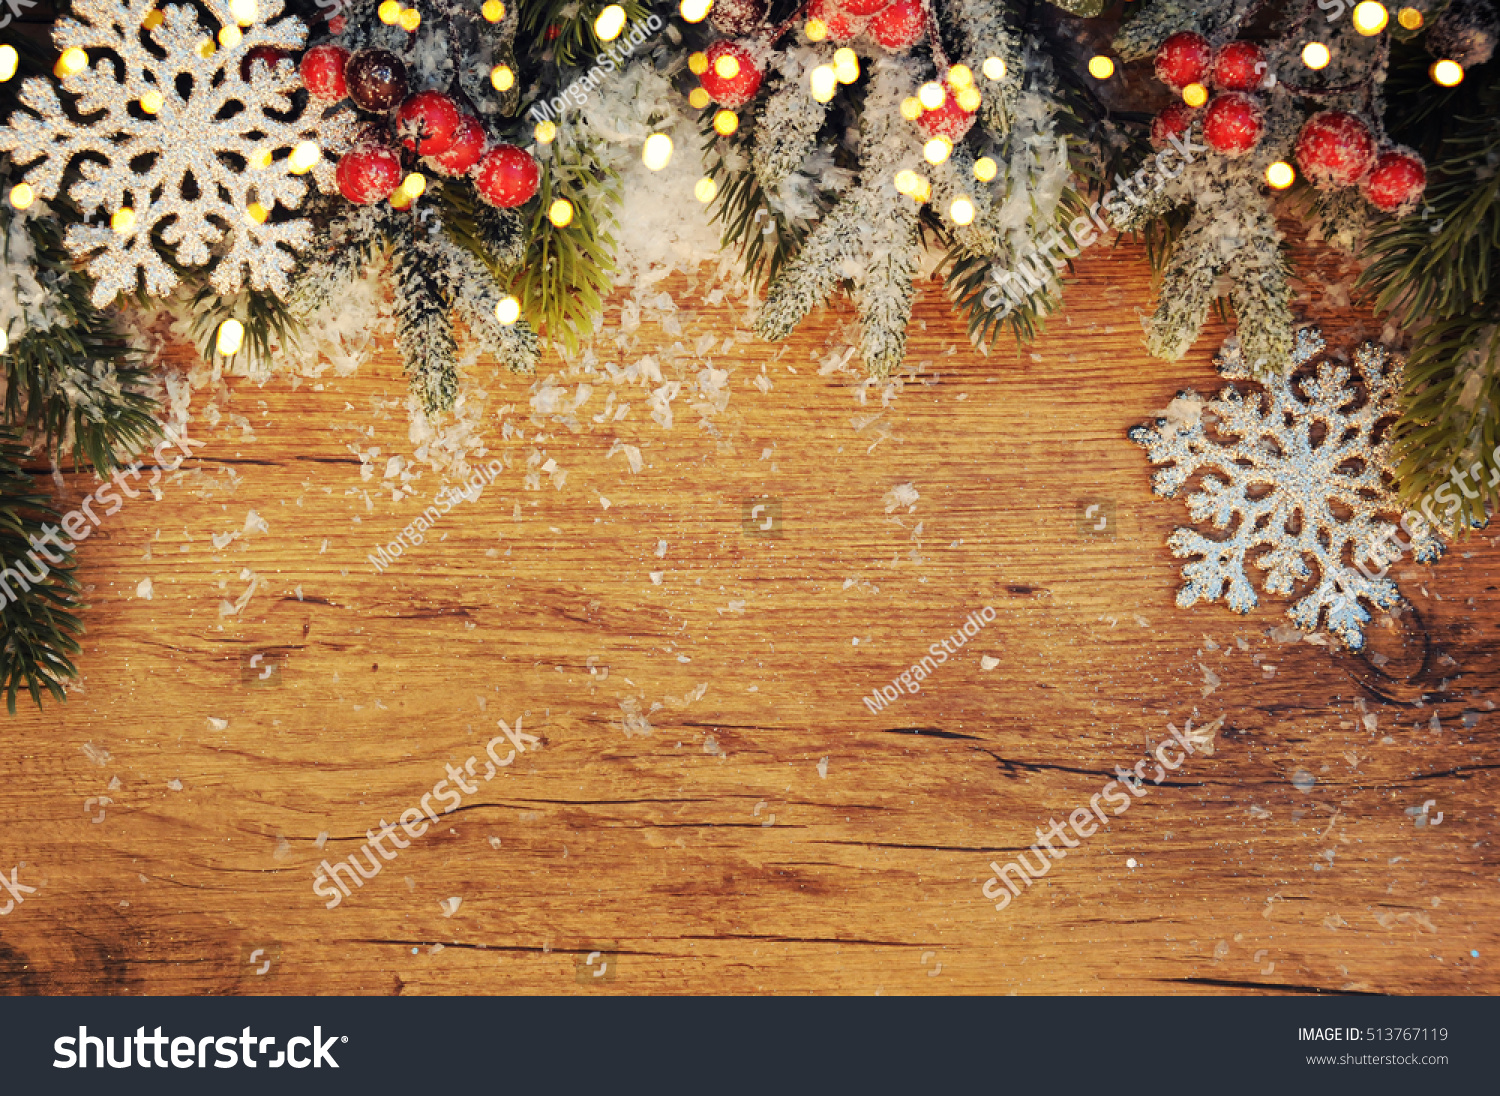 Christmas Wooden Background Stock Photo 513767119 : Shutterstock